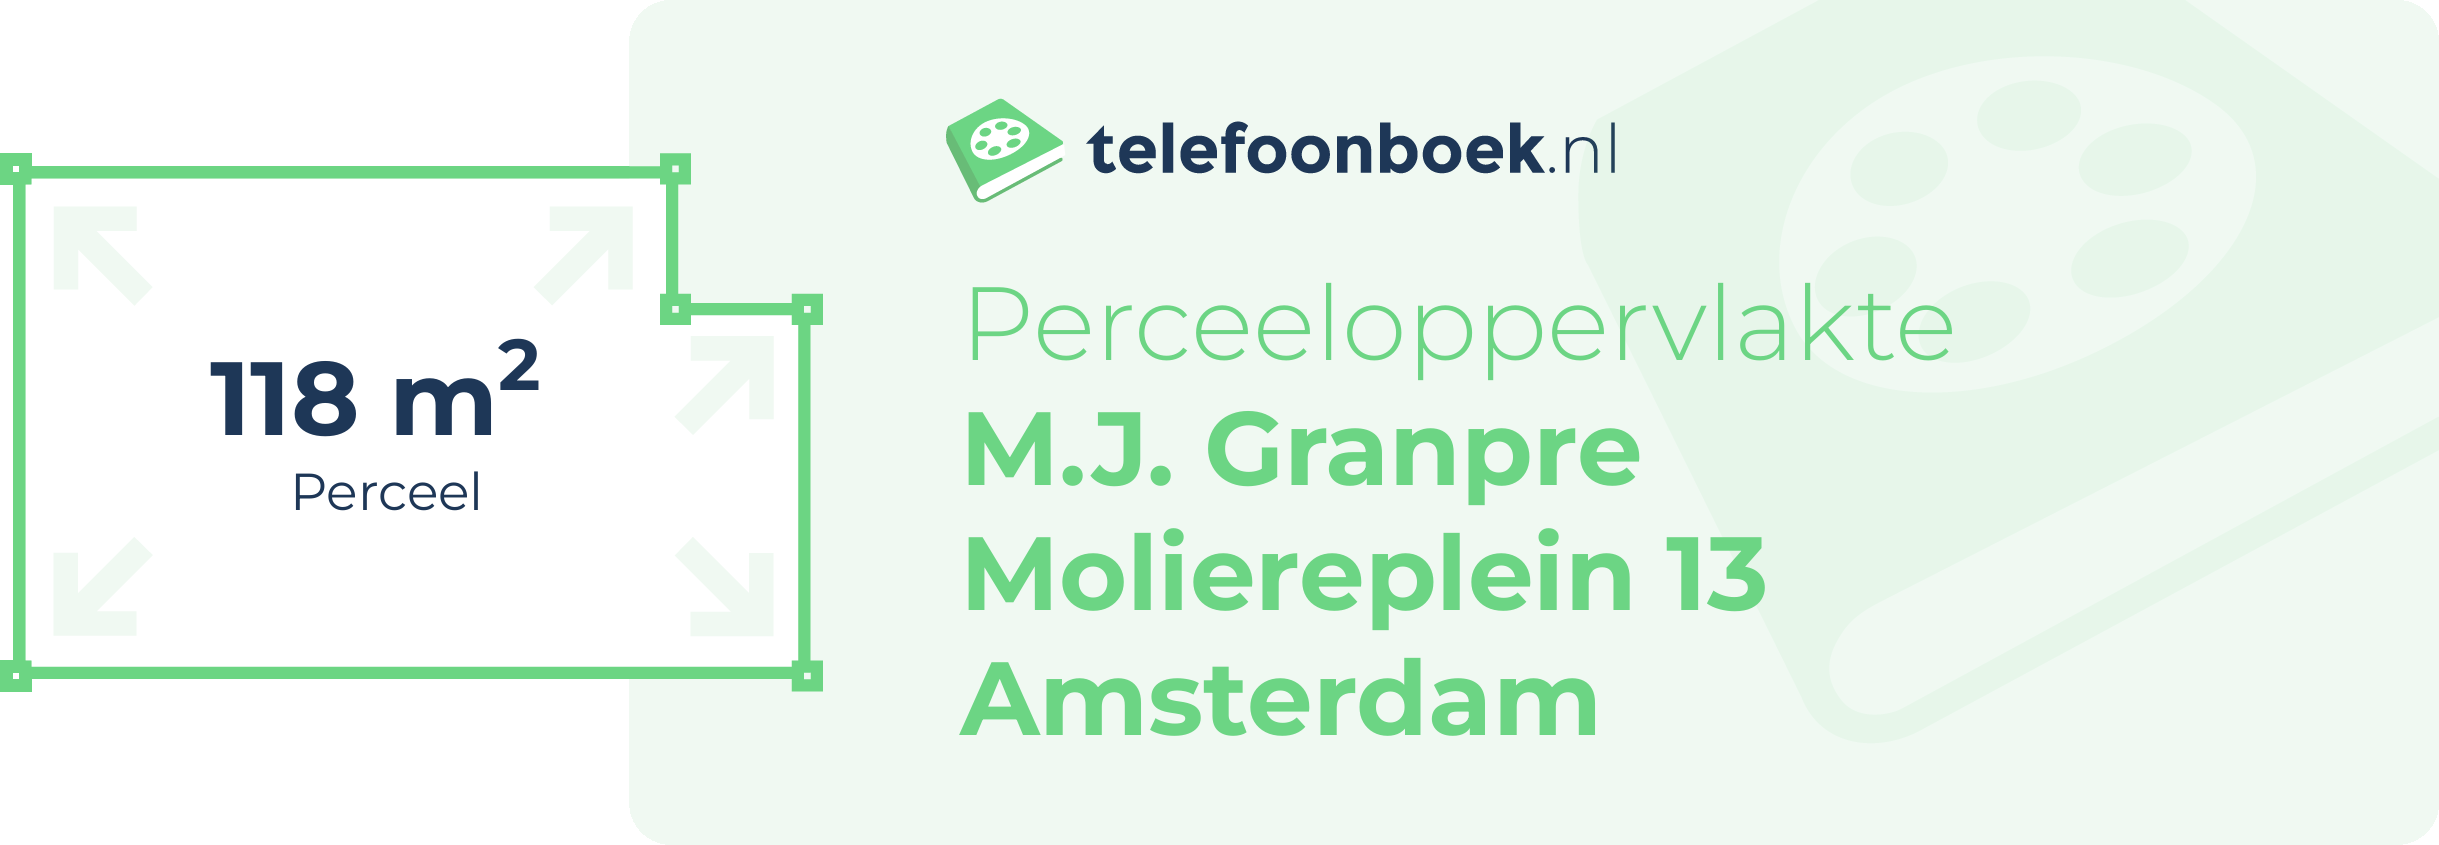 Perceeloppervlakte M.J. Granpre Moliereplein 13 Amsterdam